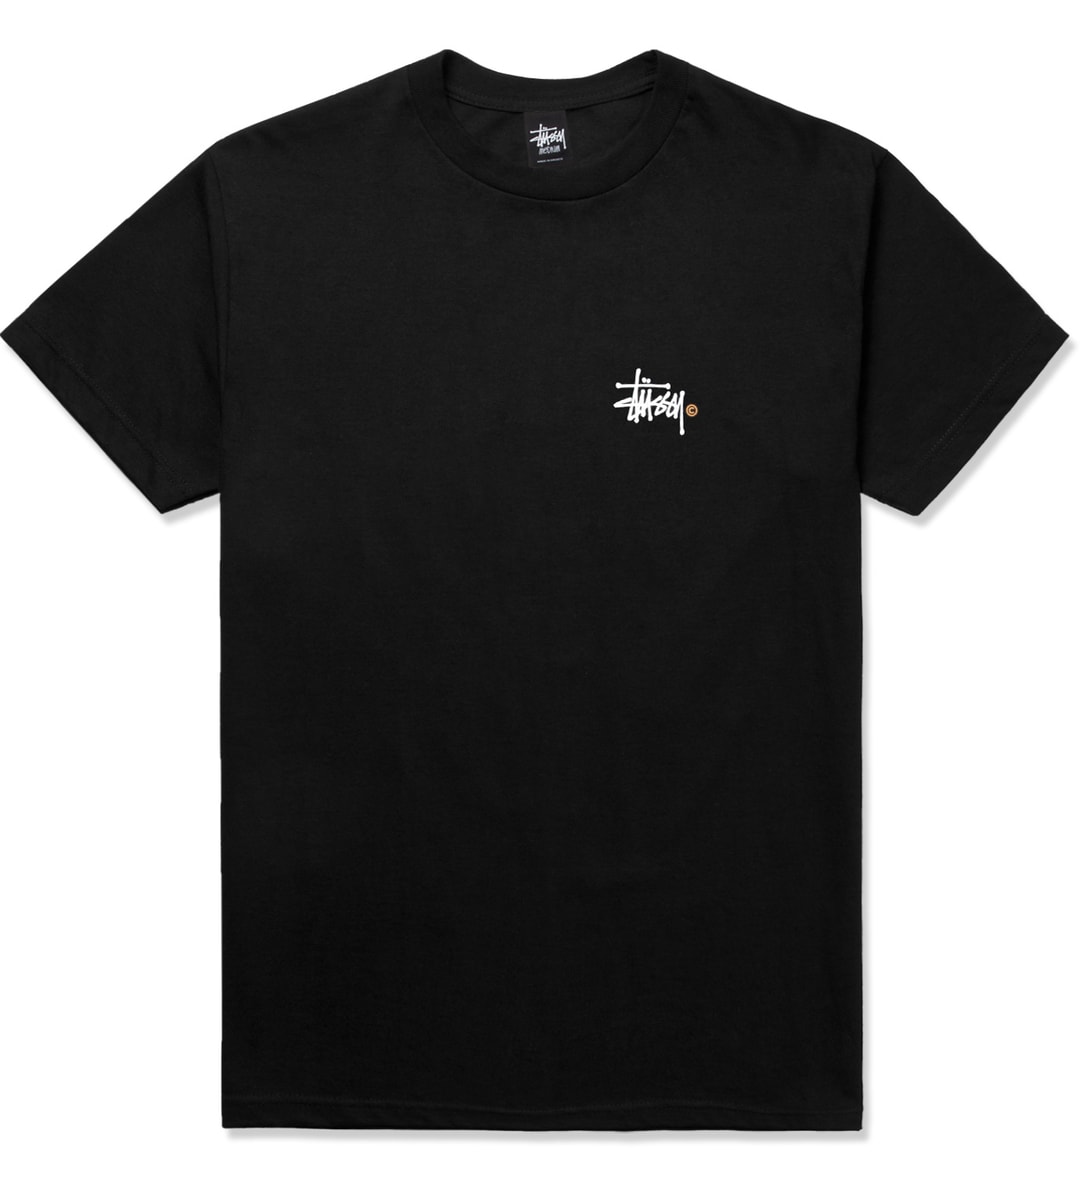 Stüssy - Black Basic Logo T-Shirt | HBX - Globally Curated Fashion and ...